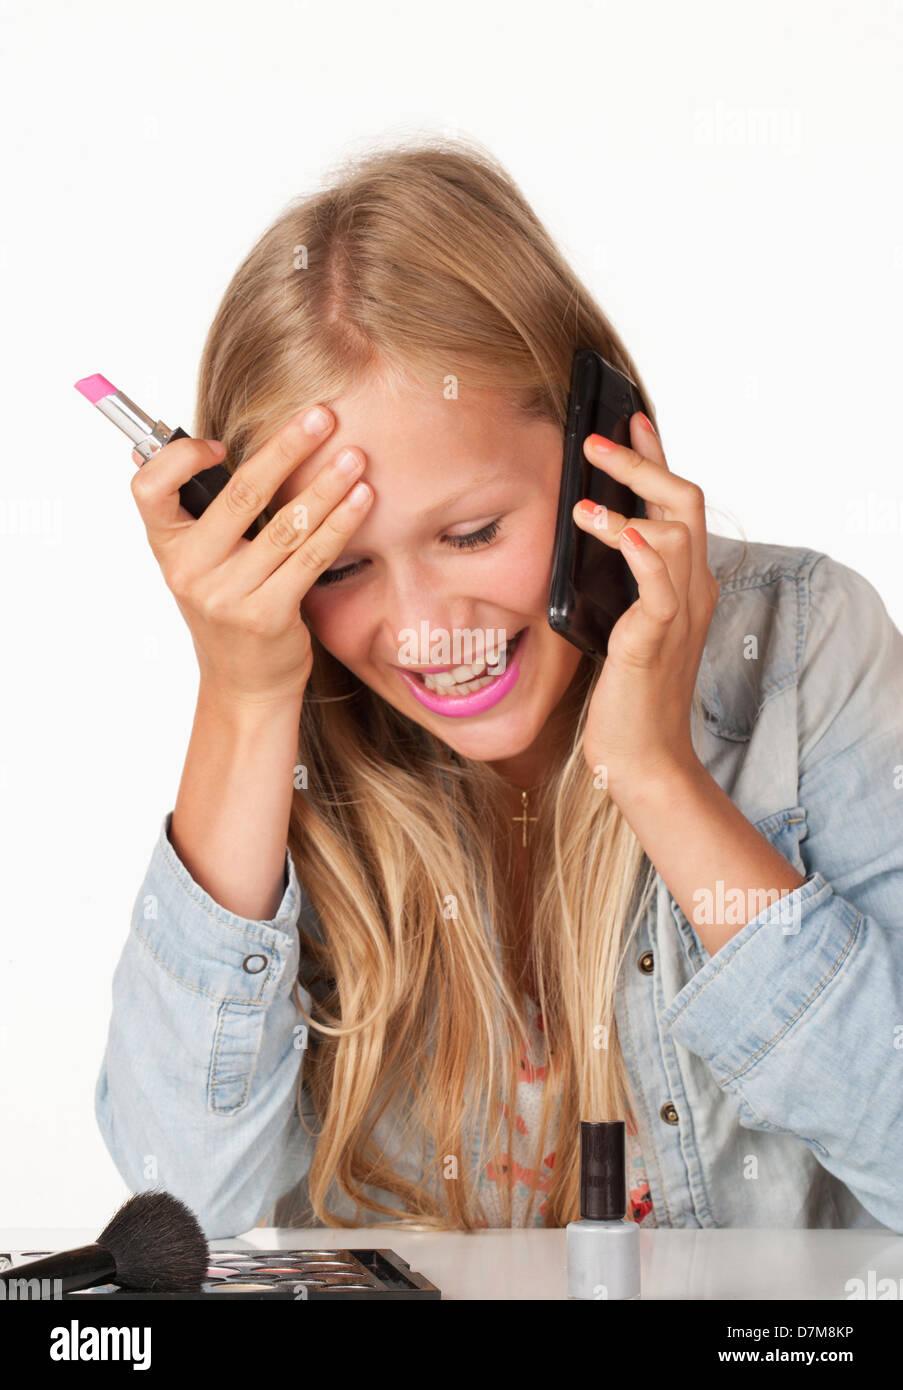 Teenage girl talking on mobile phone, smiling Banque D'Images